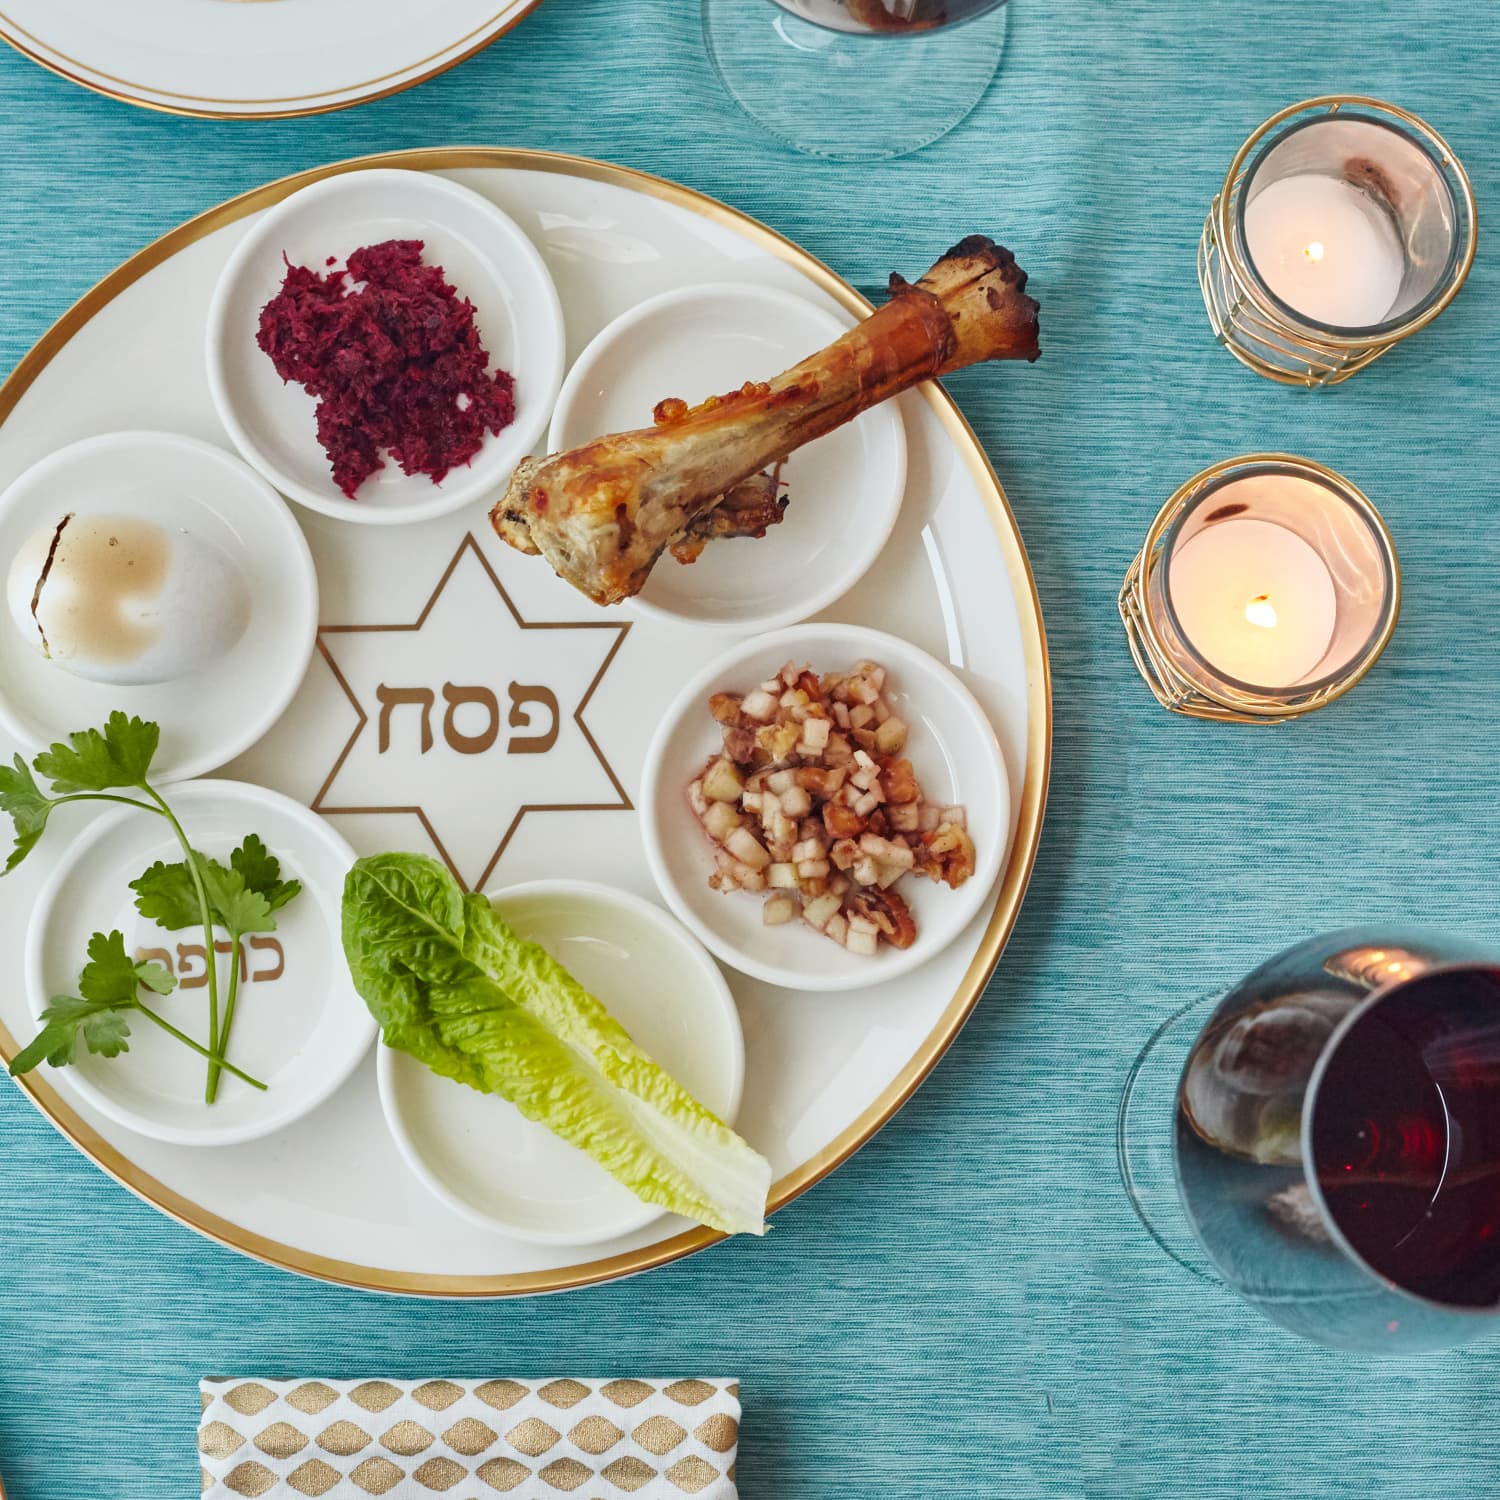 A Thanksgiving Meal Haggadah